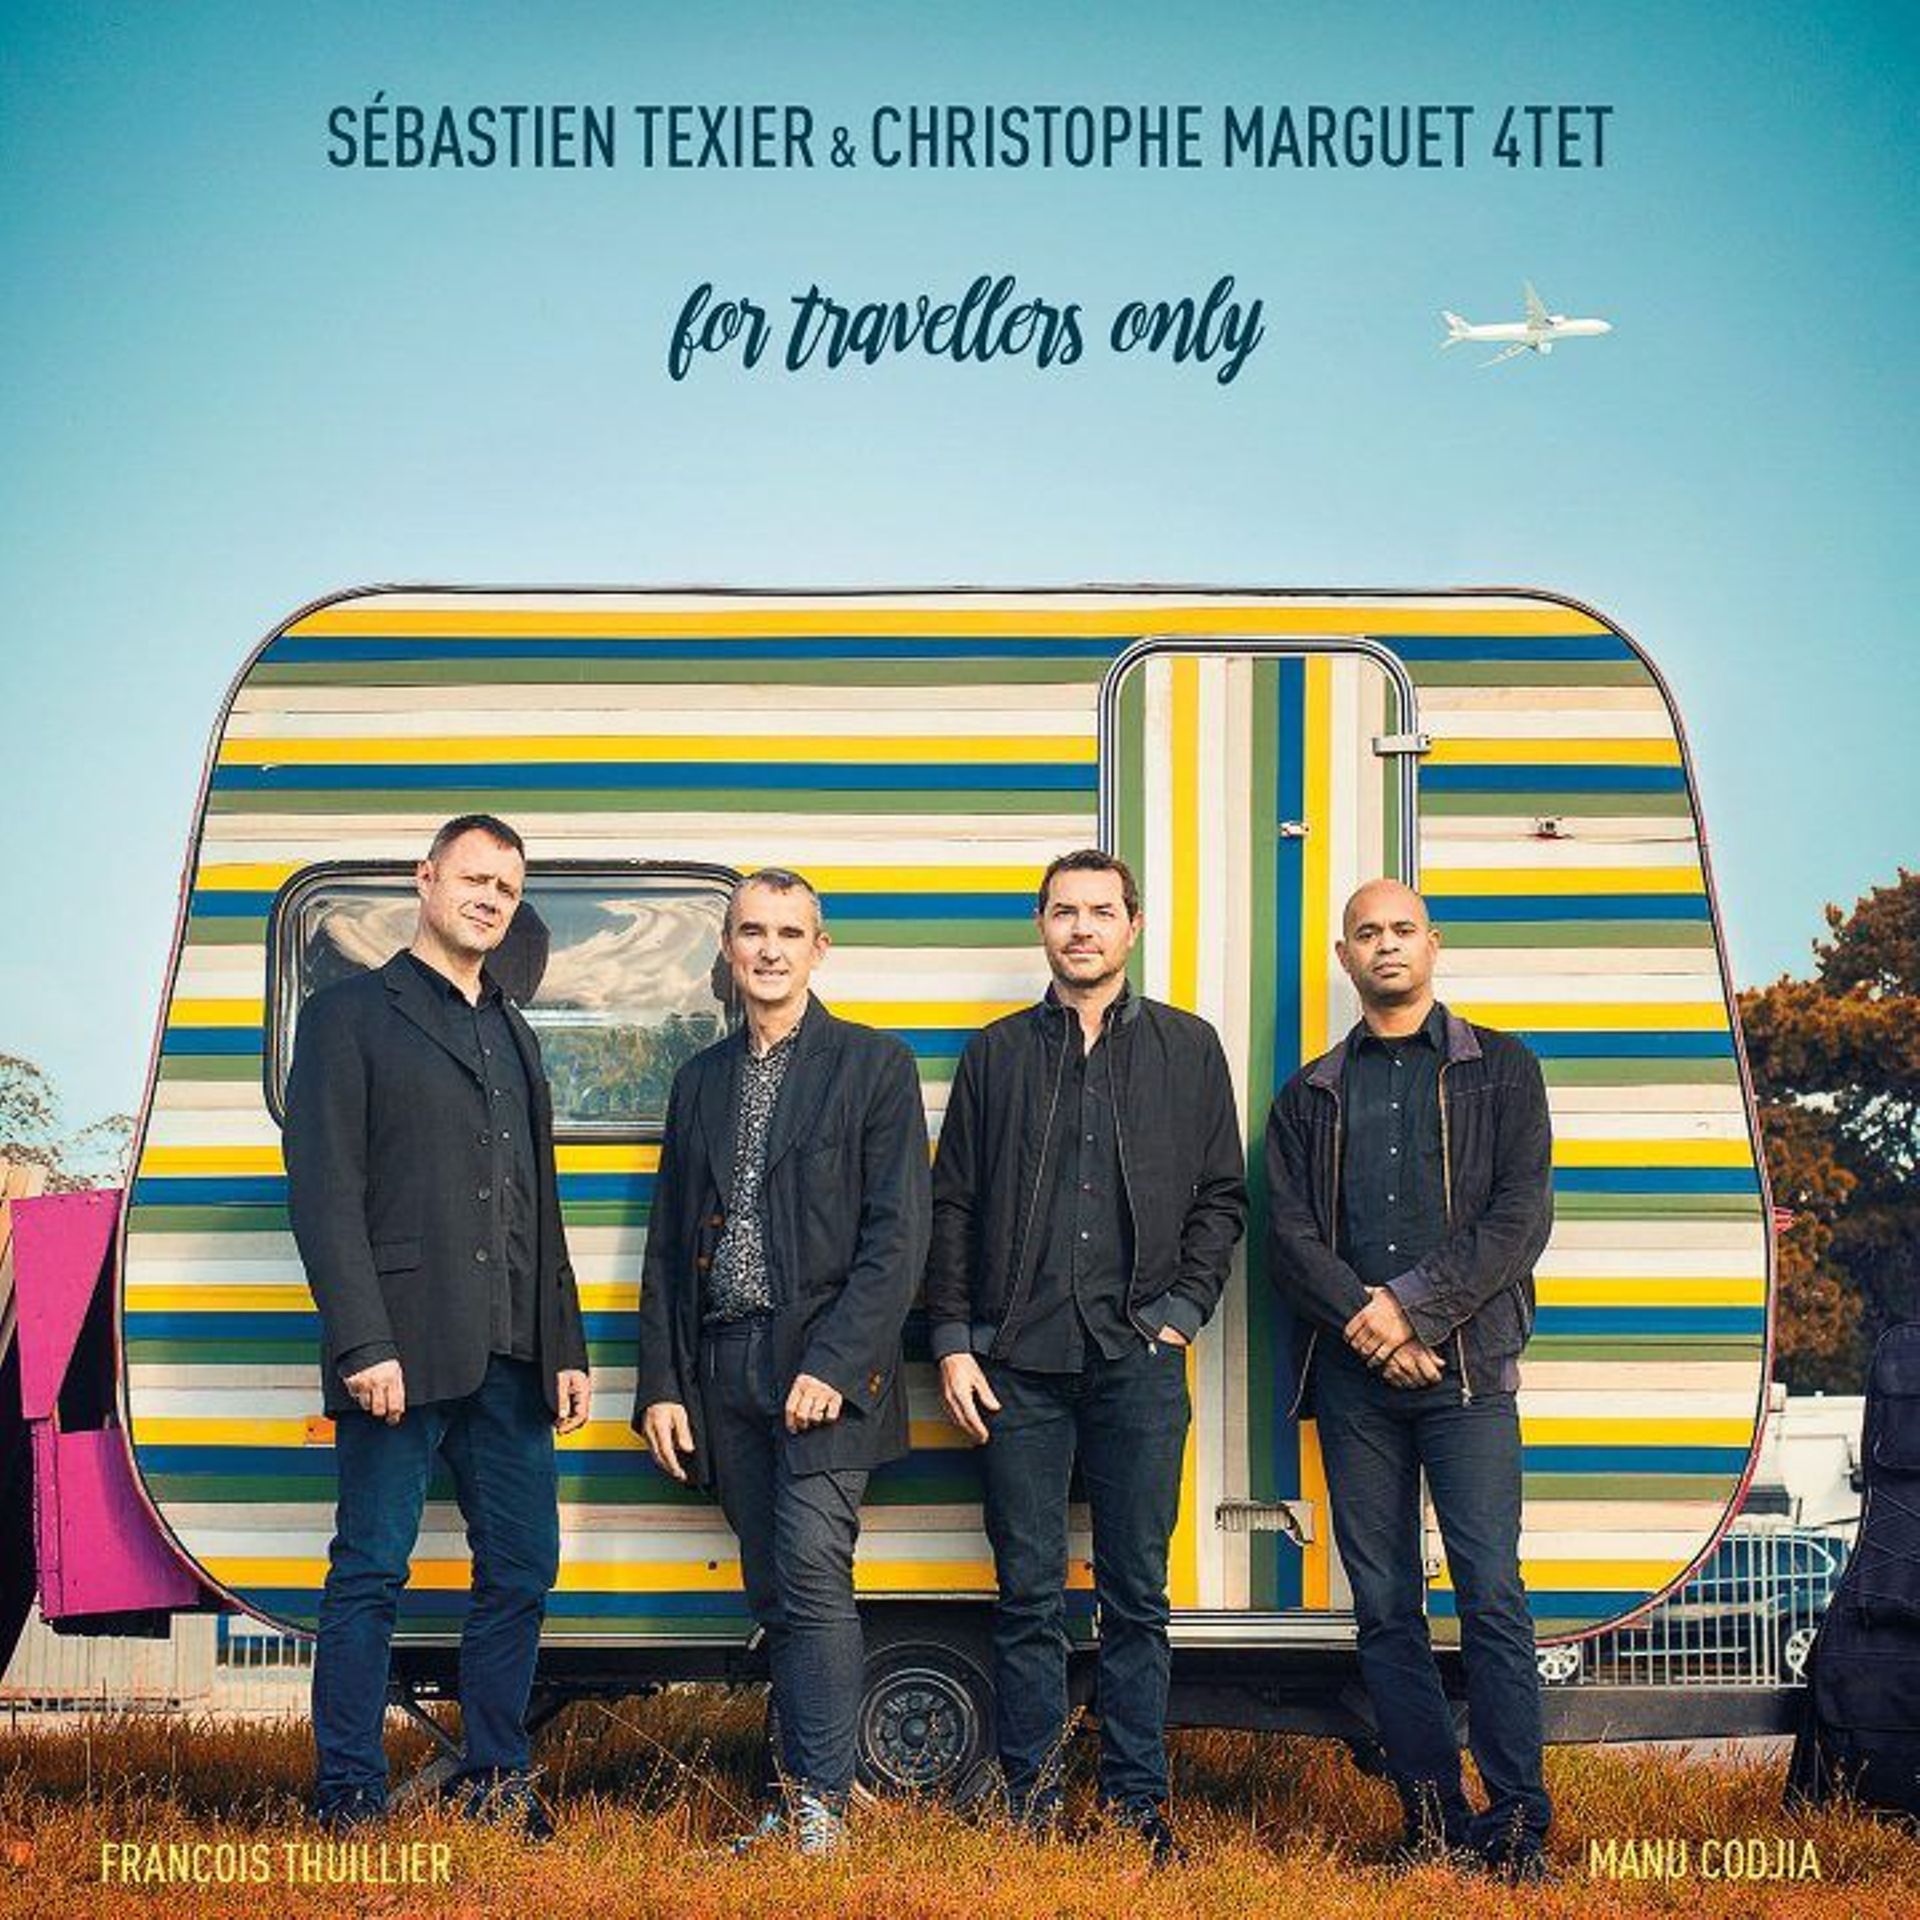 Sébastien Texier & Christophe Marguet 4tet ‎: "For Travellers Only" (2018)